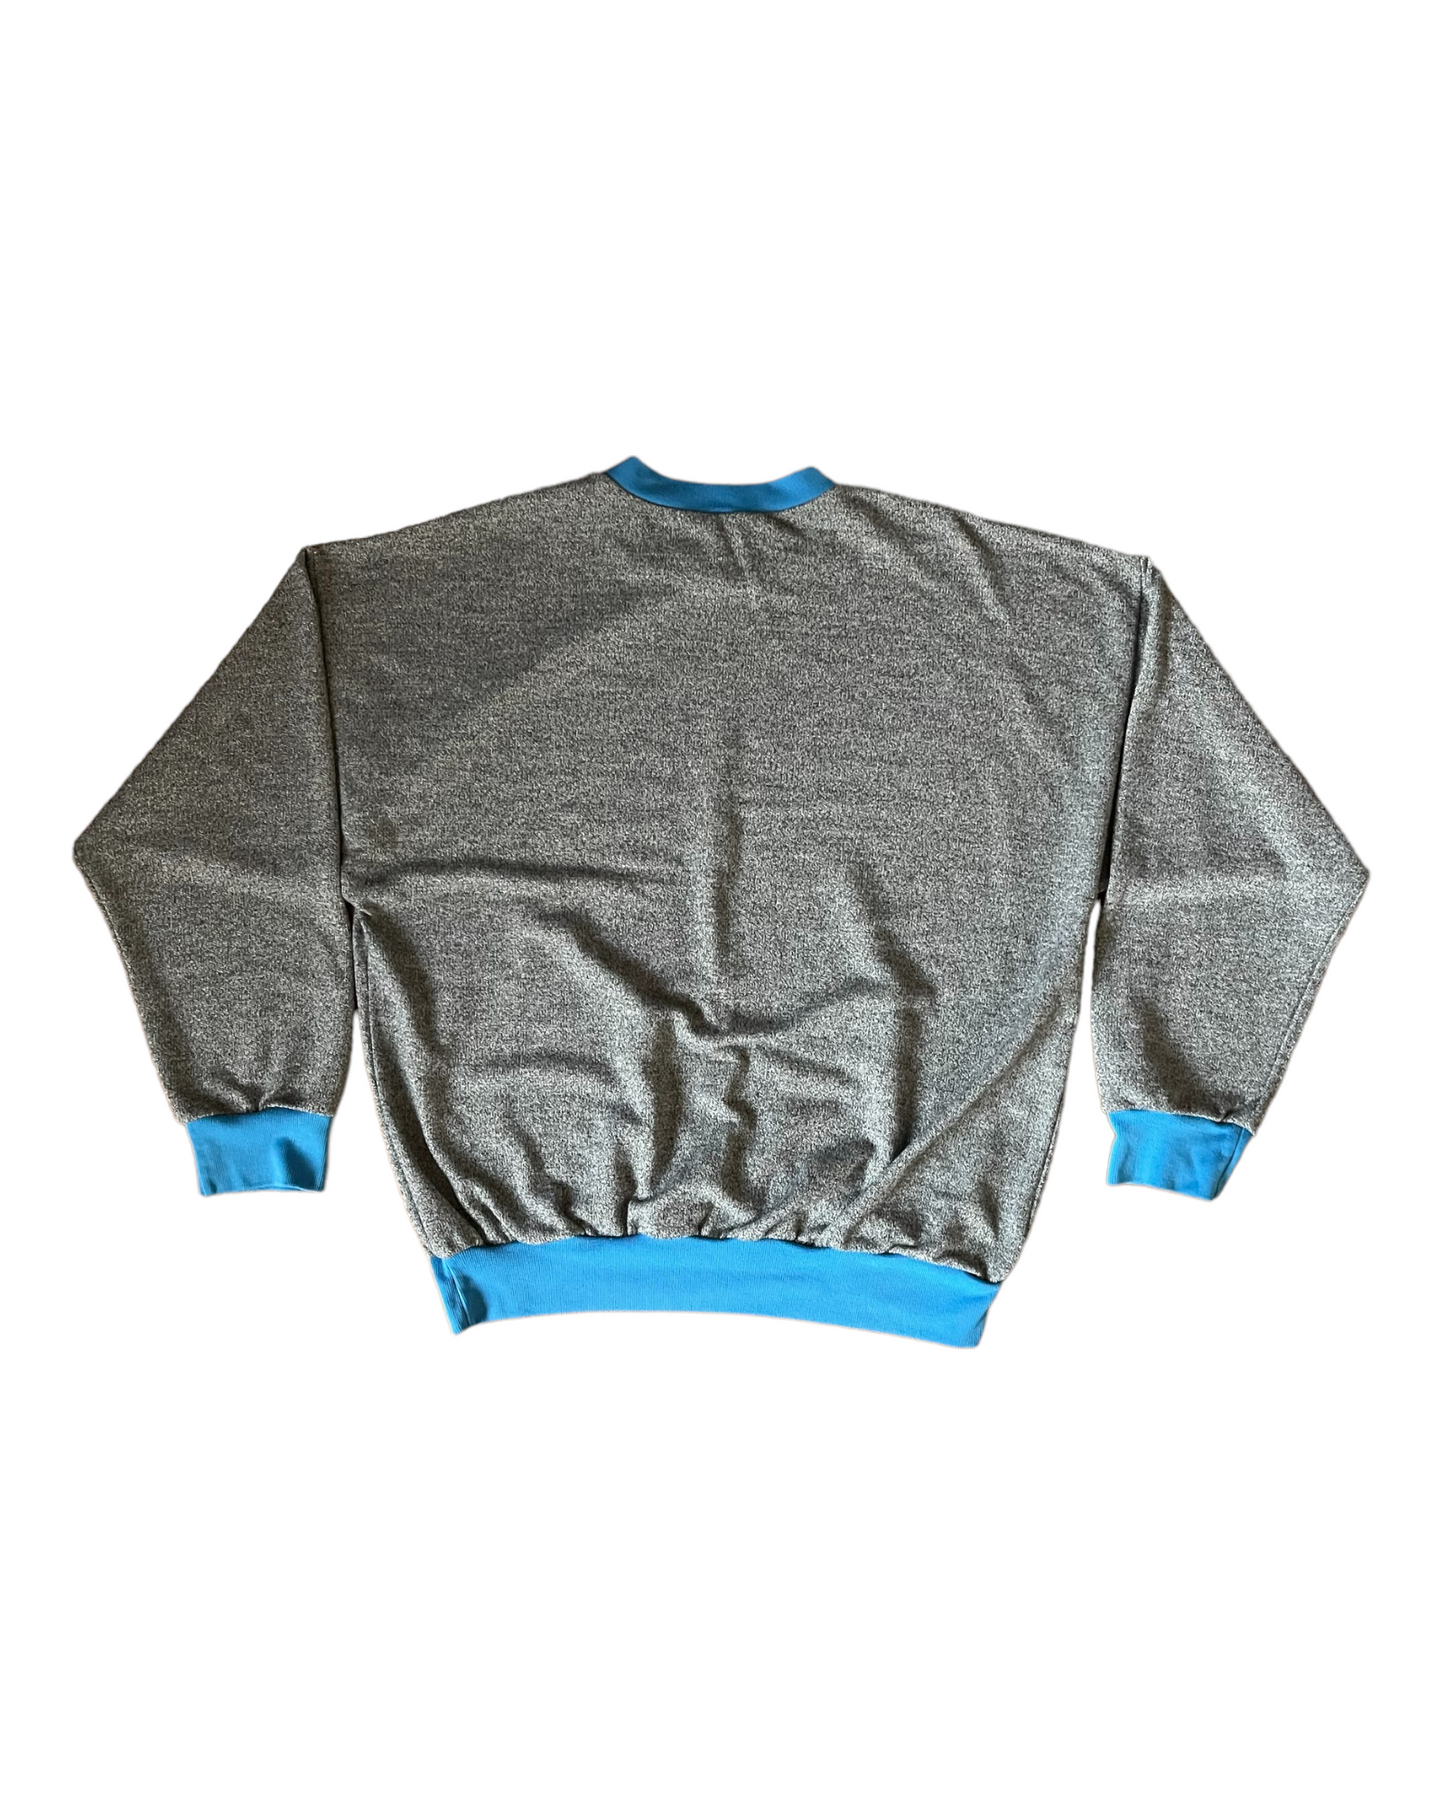 Vintage Adidas Sweatshirt Crew Neck Grey Blue Made in Singapore Size XL - XXL